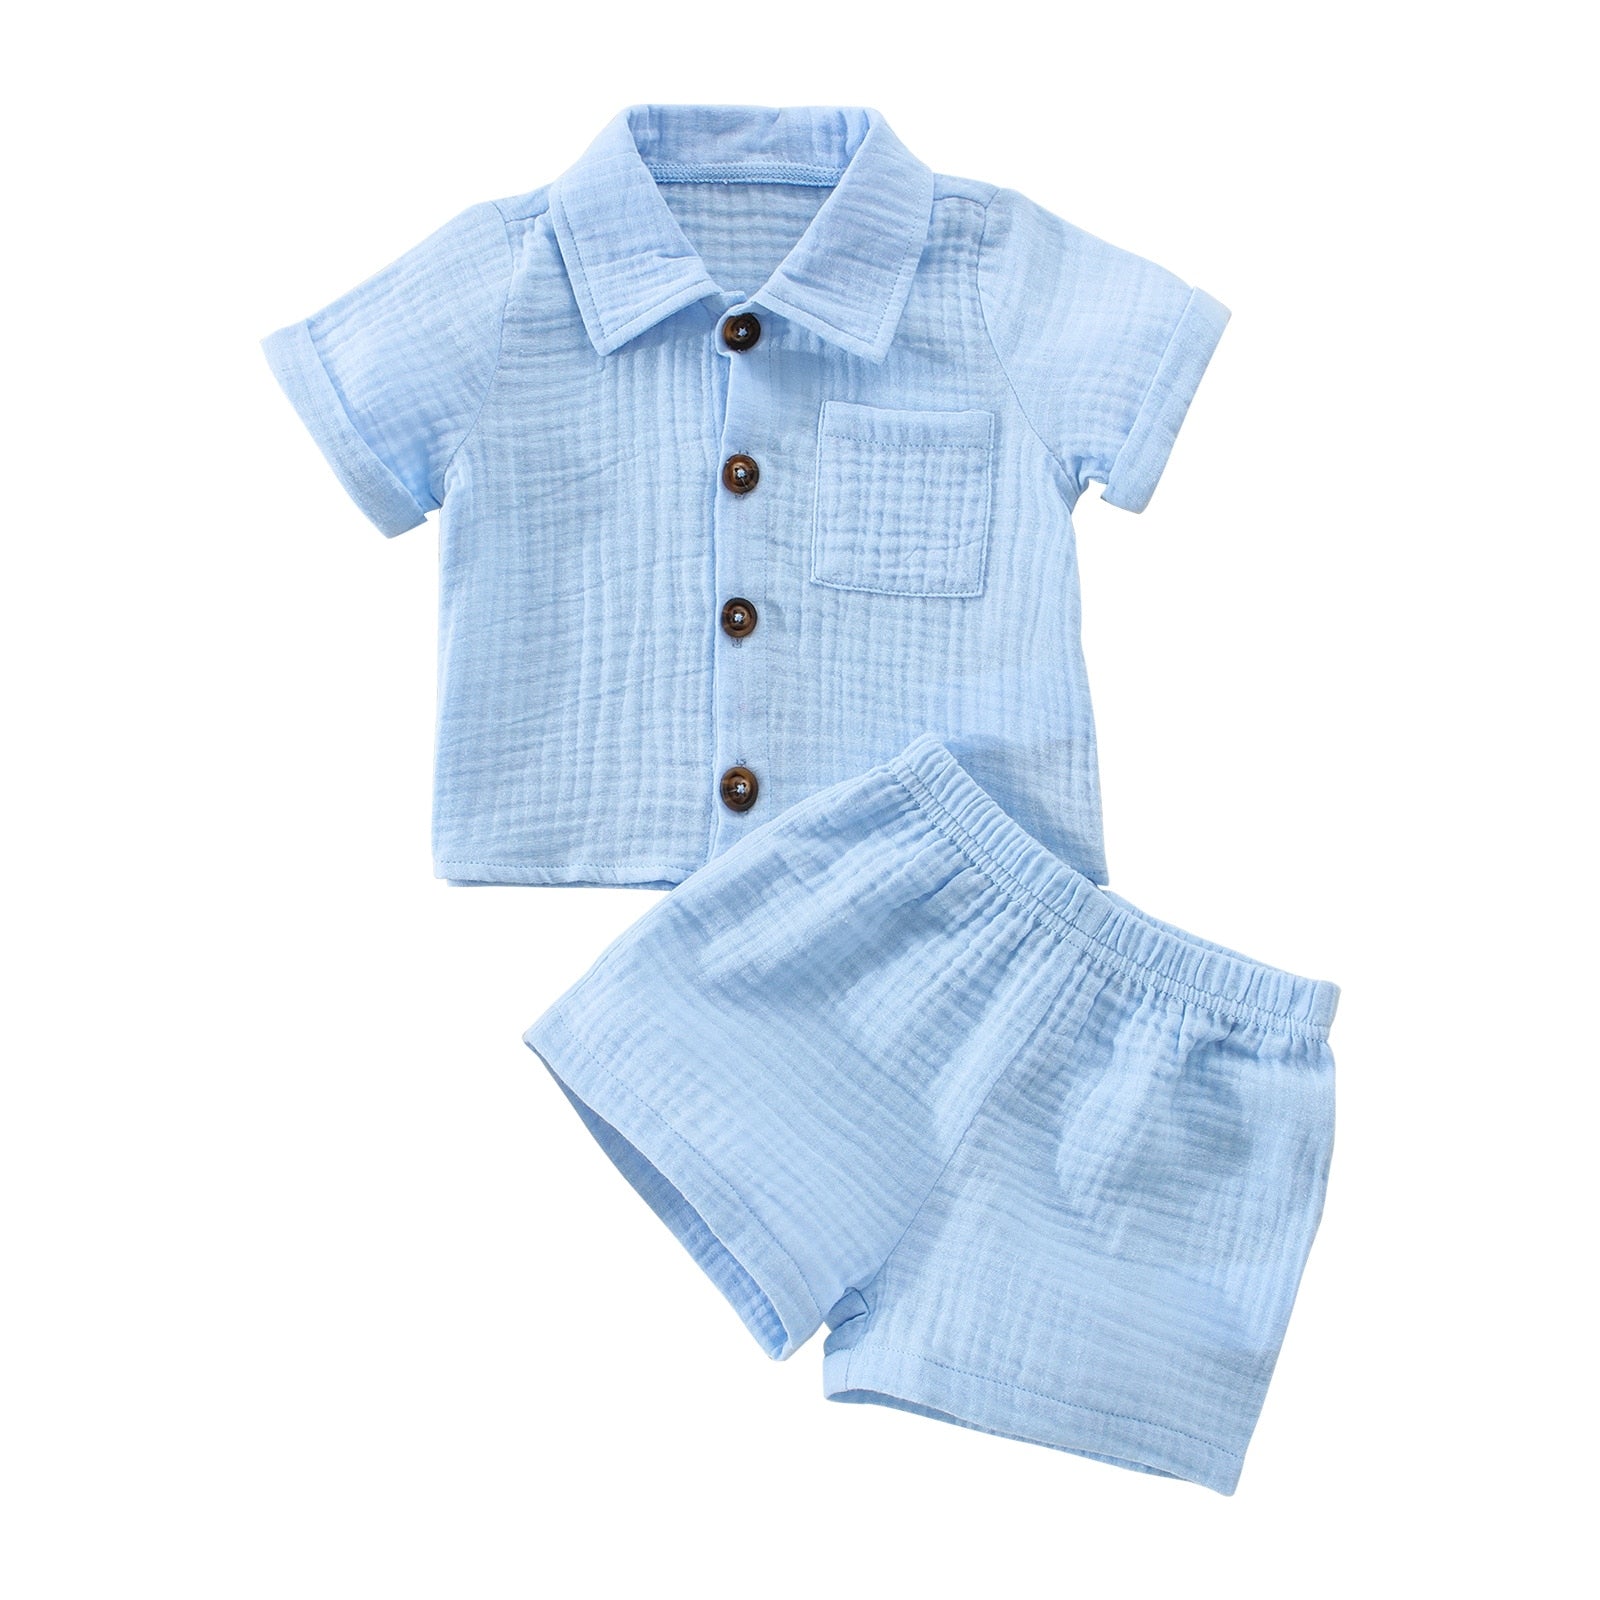 Buy Baby Boy Outfits Australia - Baby Clothes Set - Nixon's Closet ...